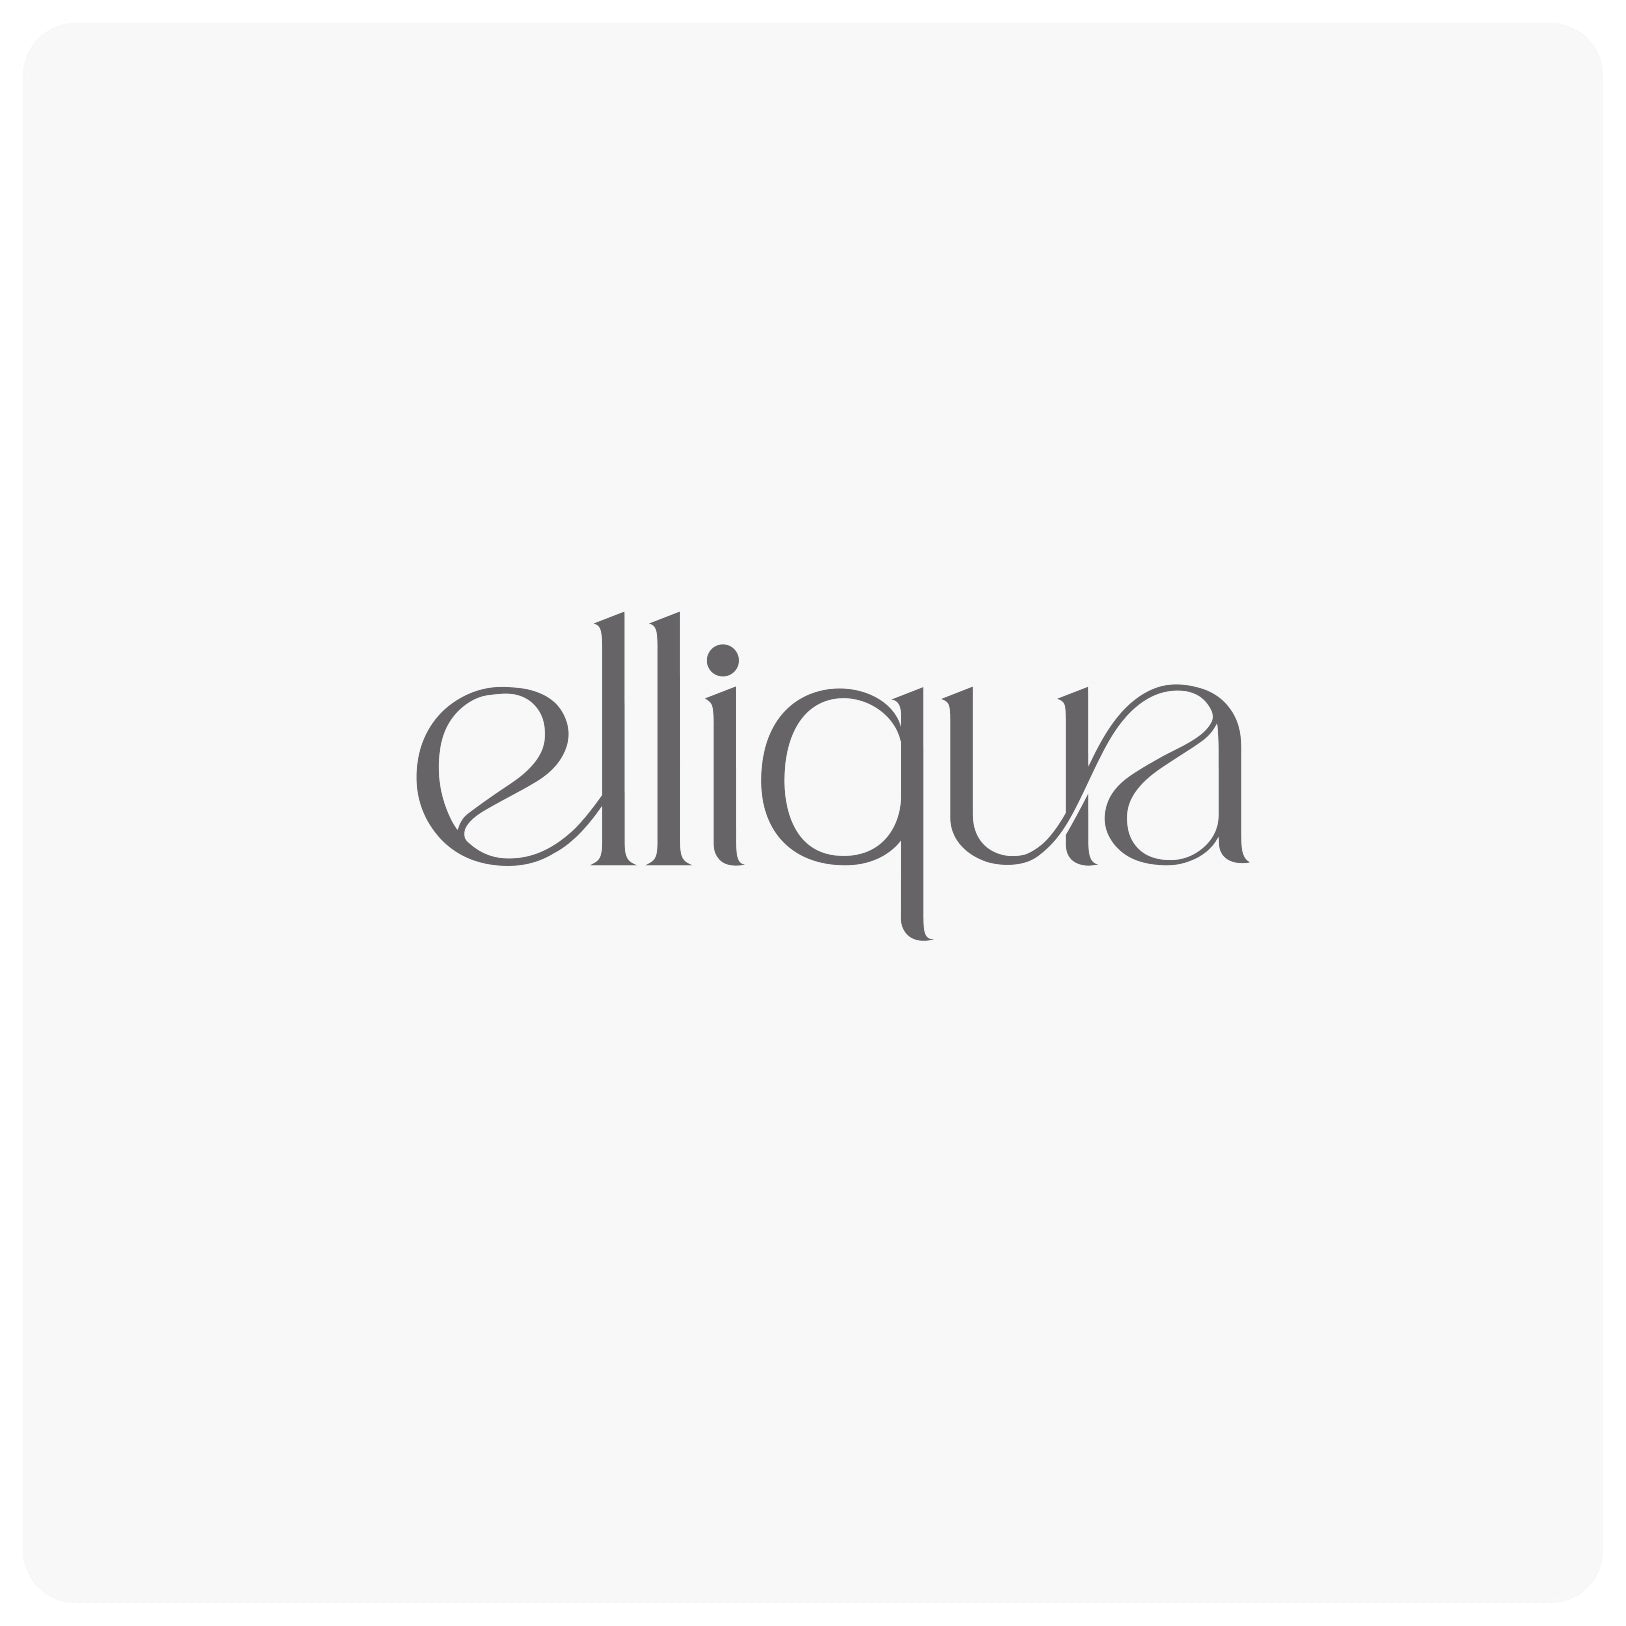 Elliqua Logo